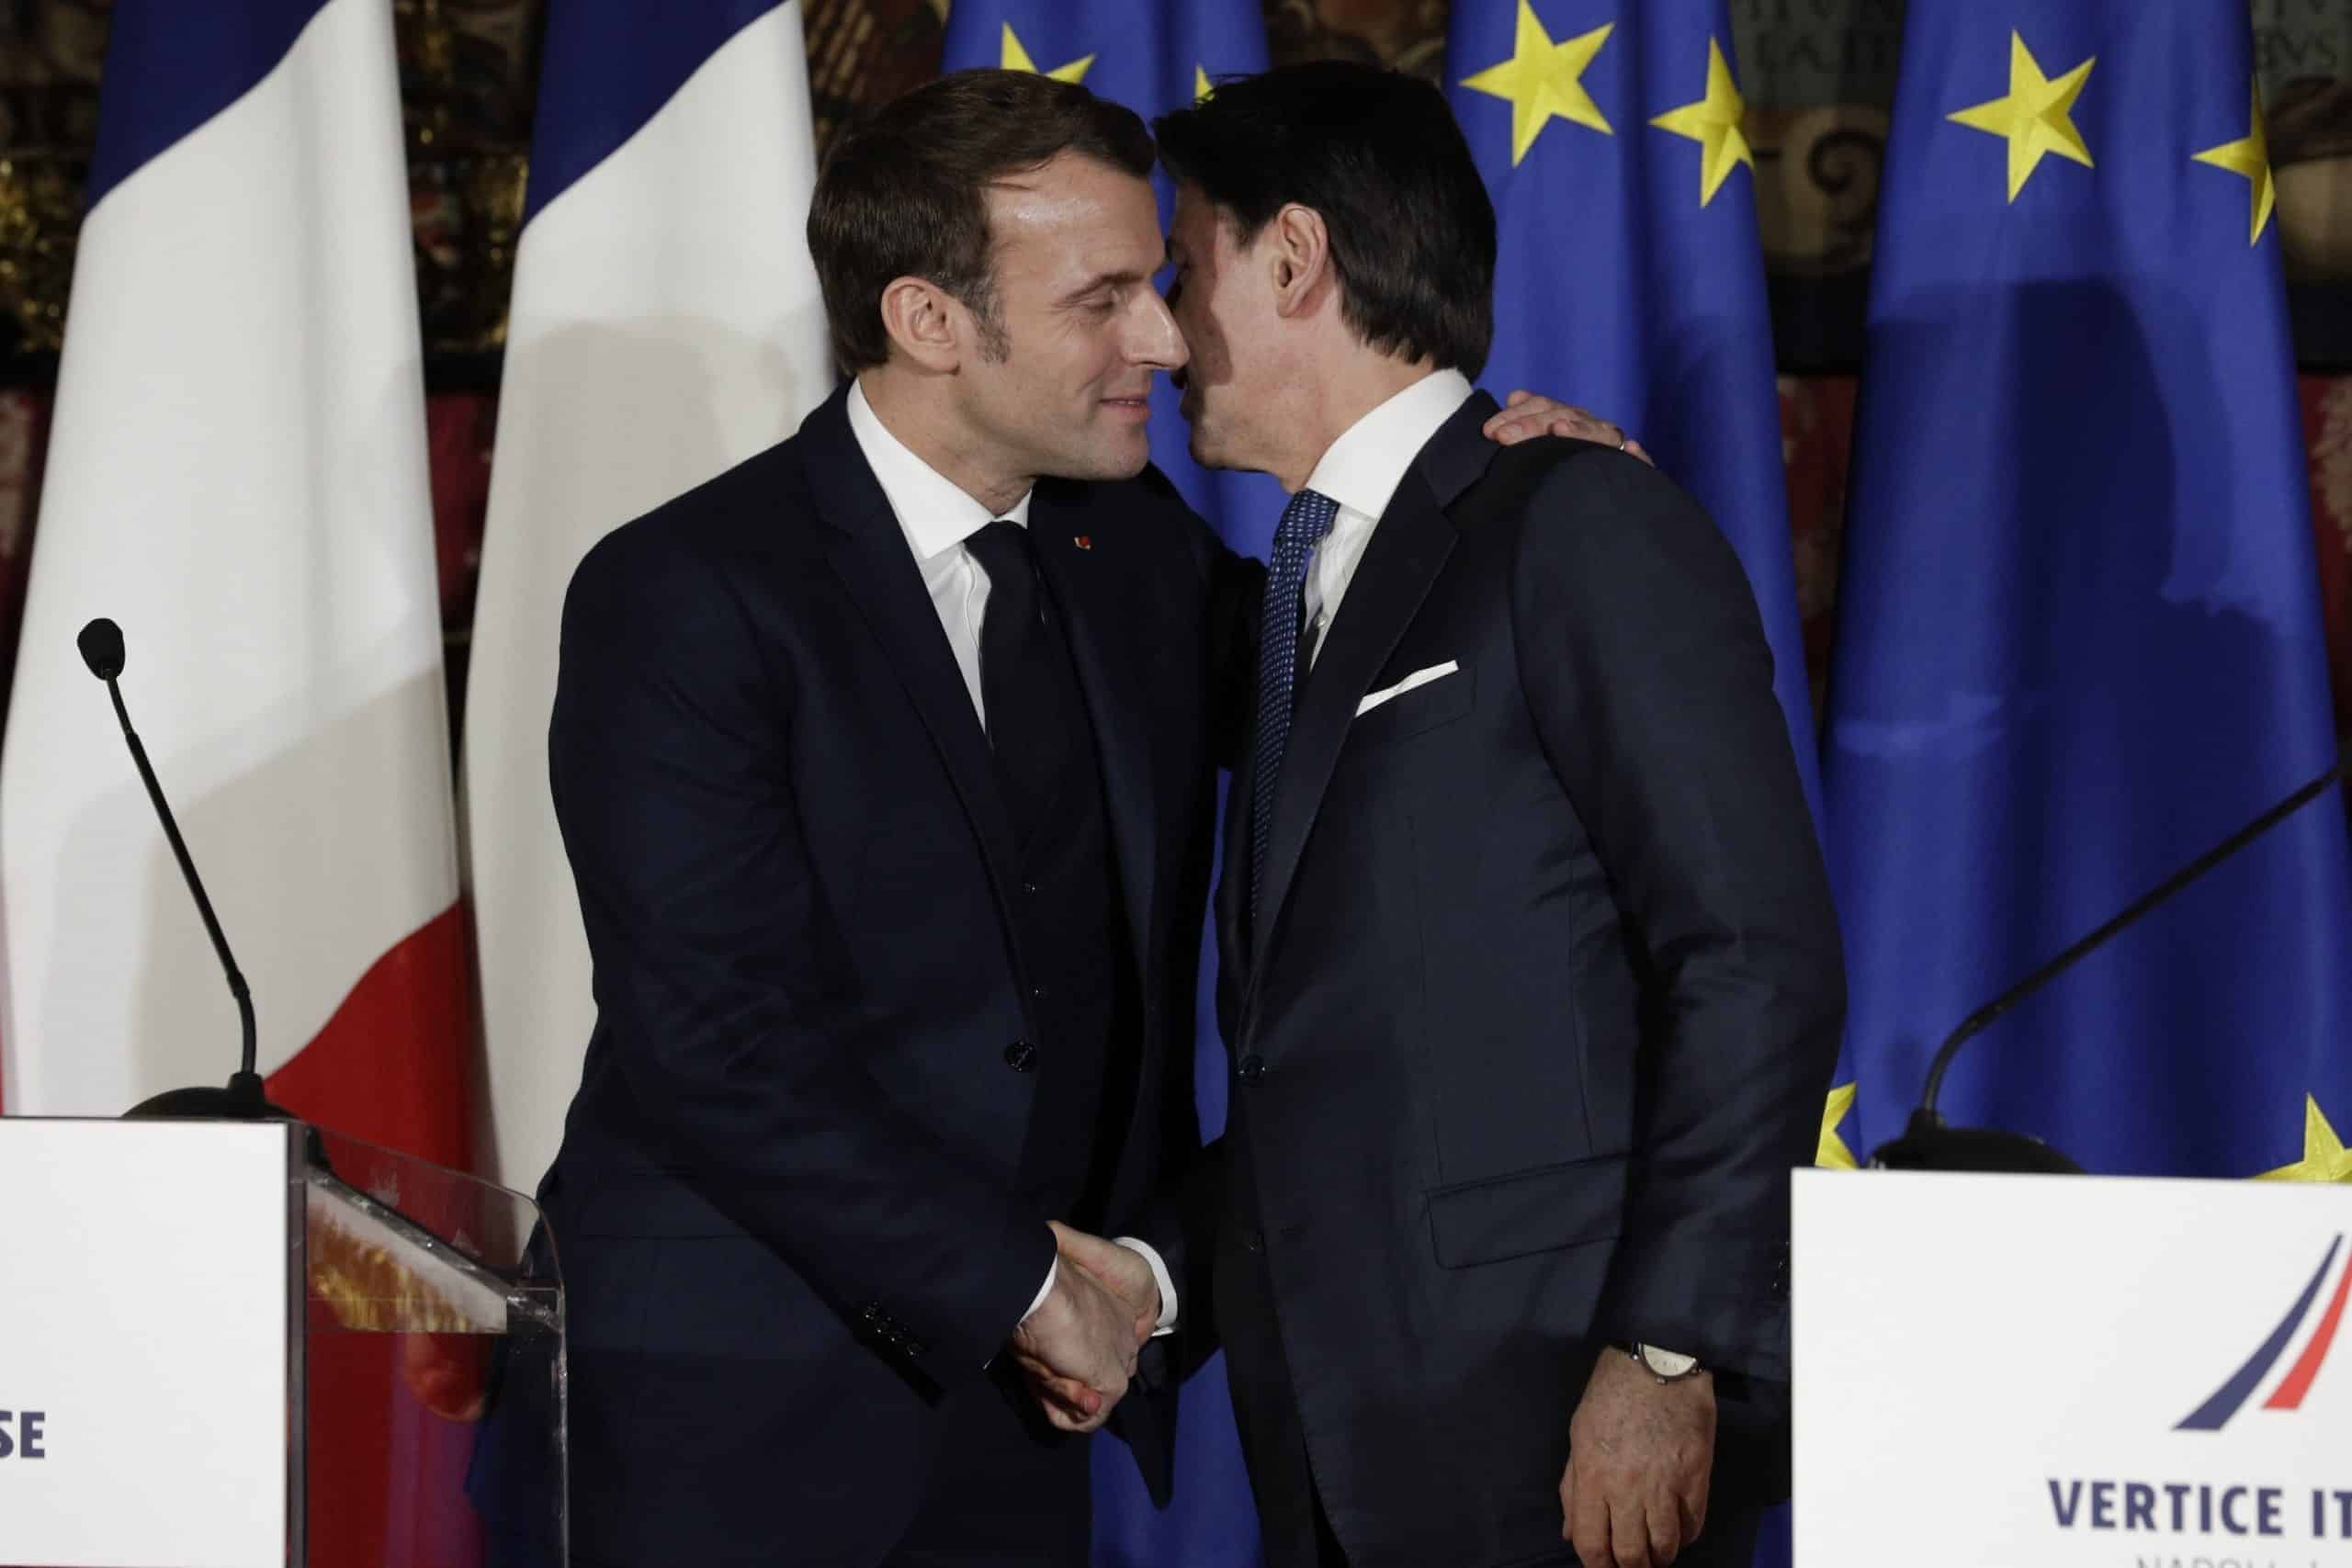 Friendly kissing poses European dilemma as virus spreads